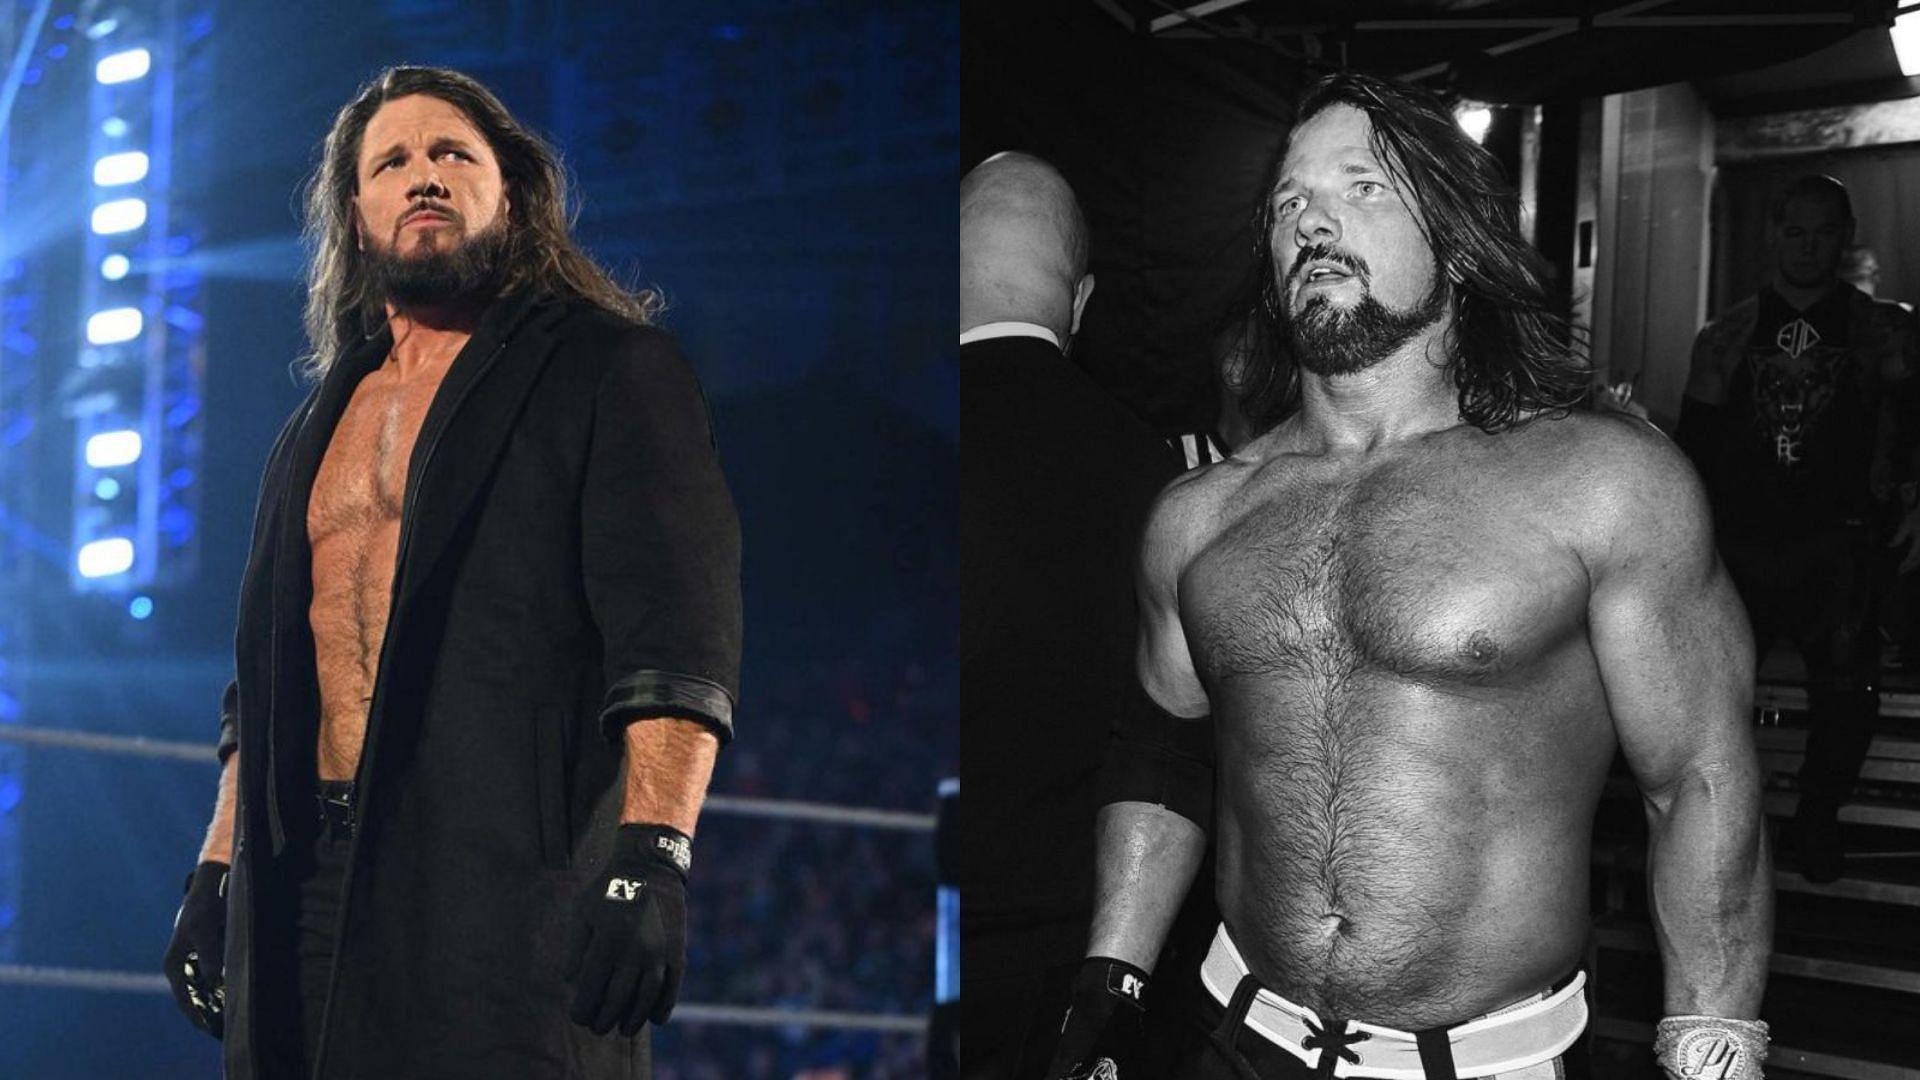 AJ Styles recently made his WWE return